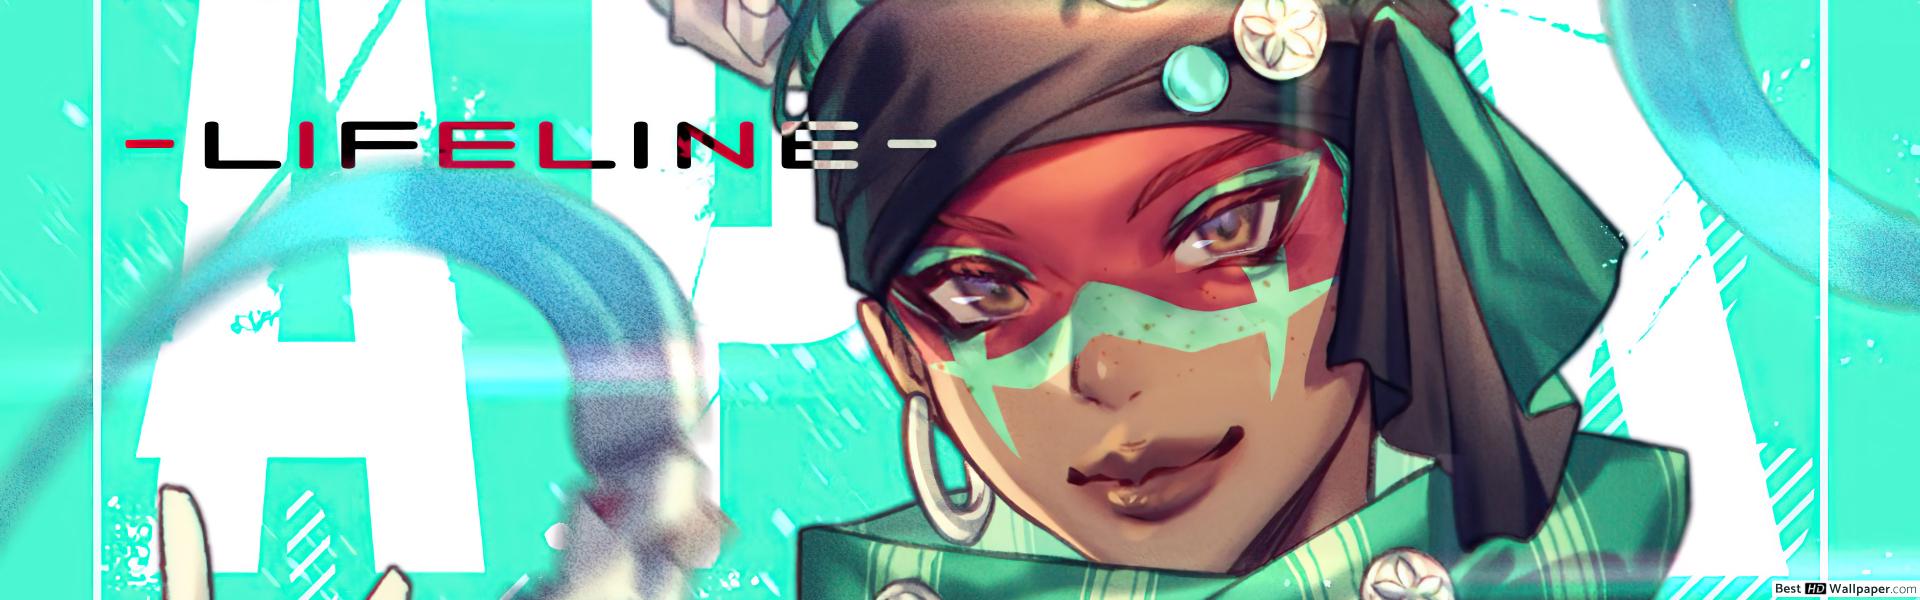 Lifeline (Anime FA) Legends (Video Game) HD wallpaper download